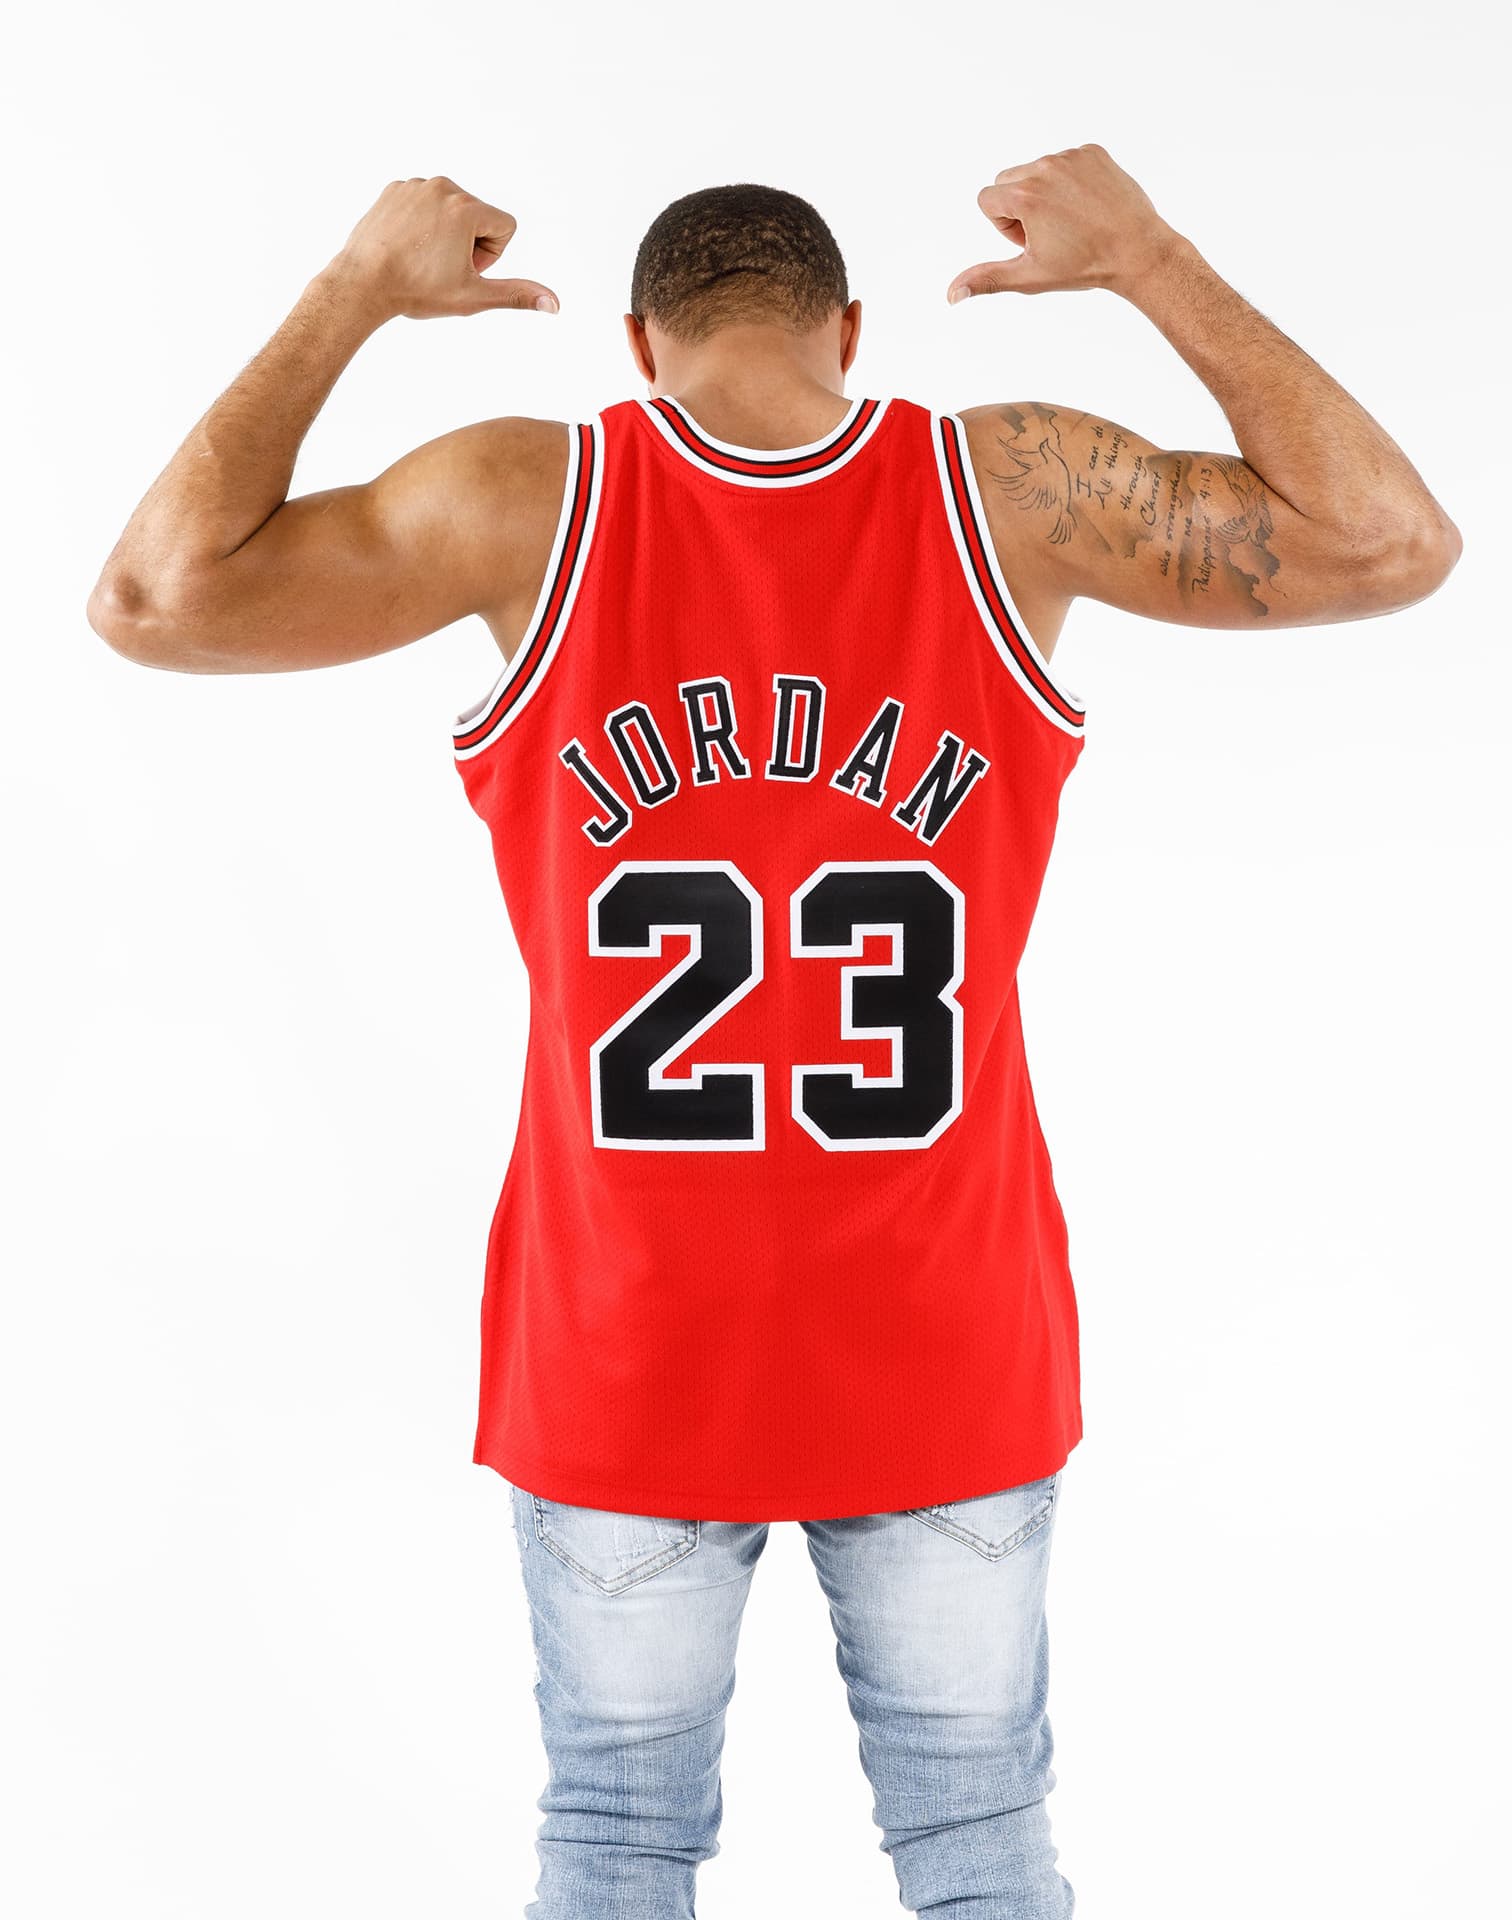 Mitchell and Ness x NBA Men Chicago Bulls Michael Jordan Jersey - Home 97 (White)